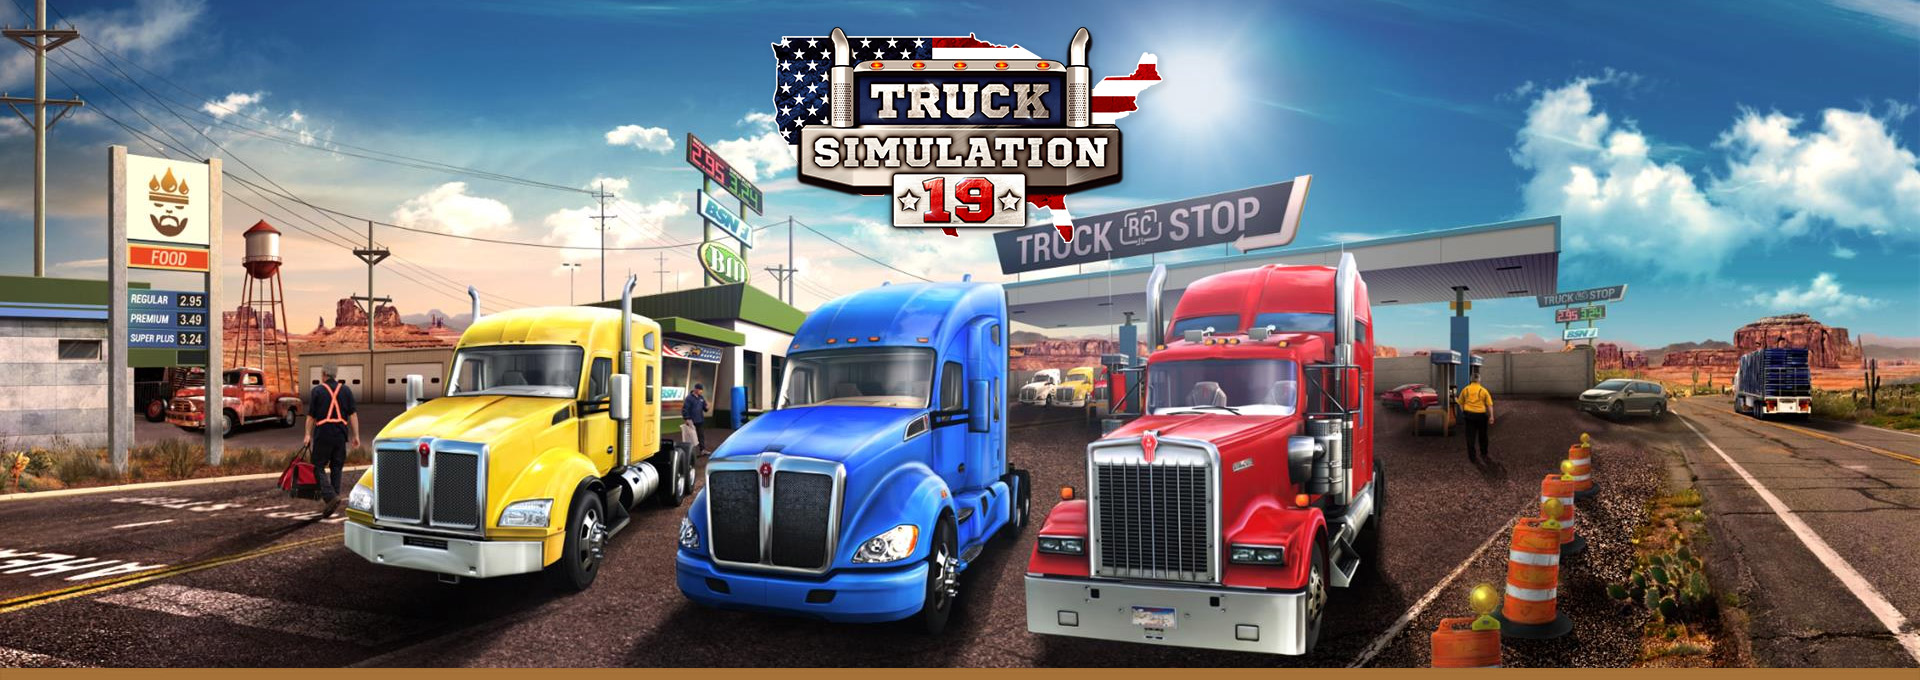 Truck Simulation 19 | DRIVE THE ORIGINAL